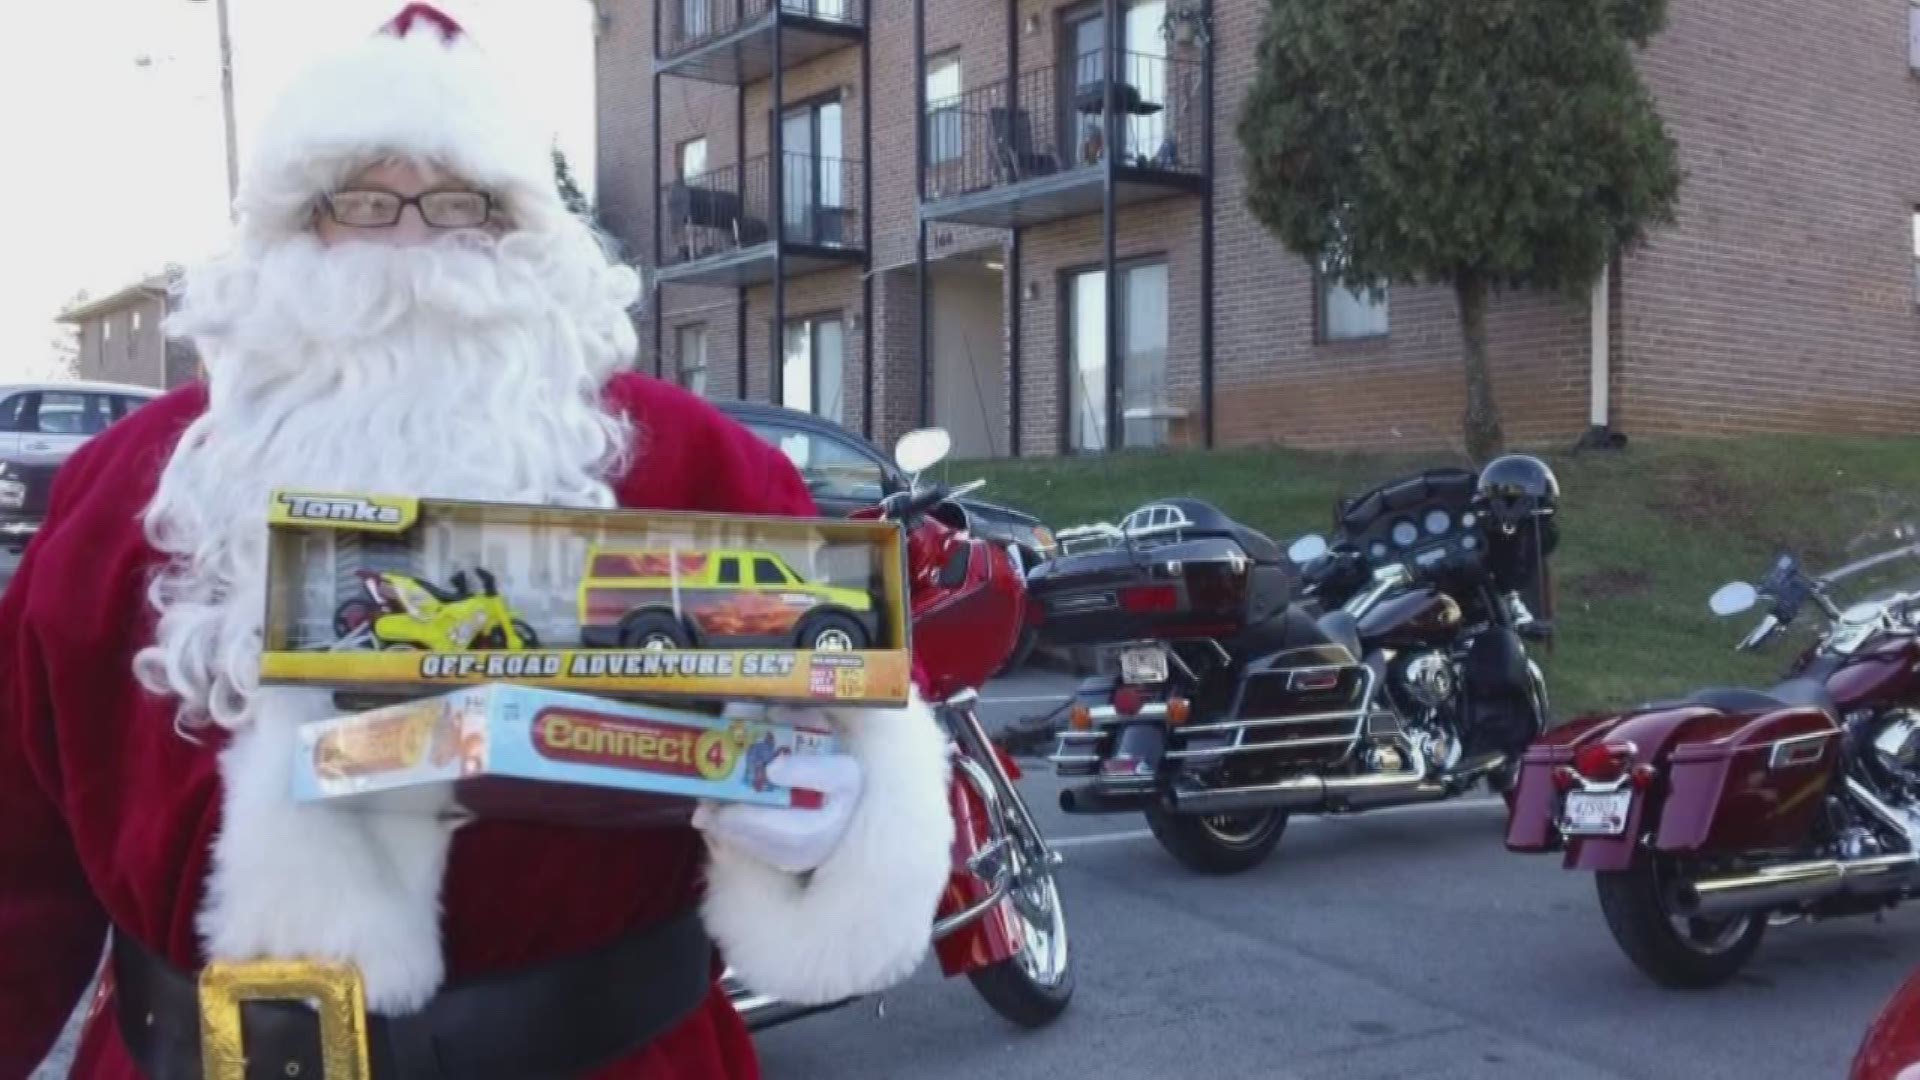 Knoxville Harley Group Revvs Up Santa S